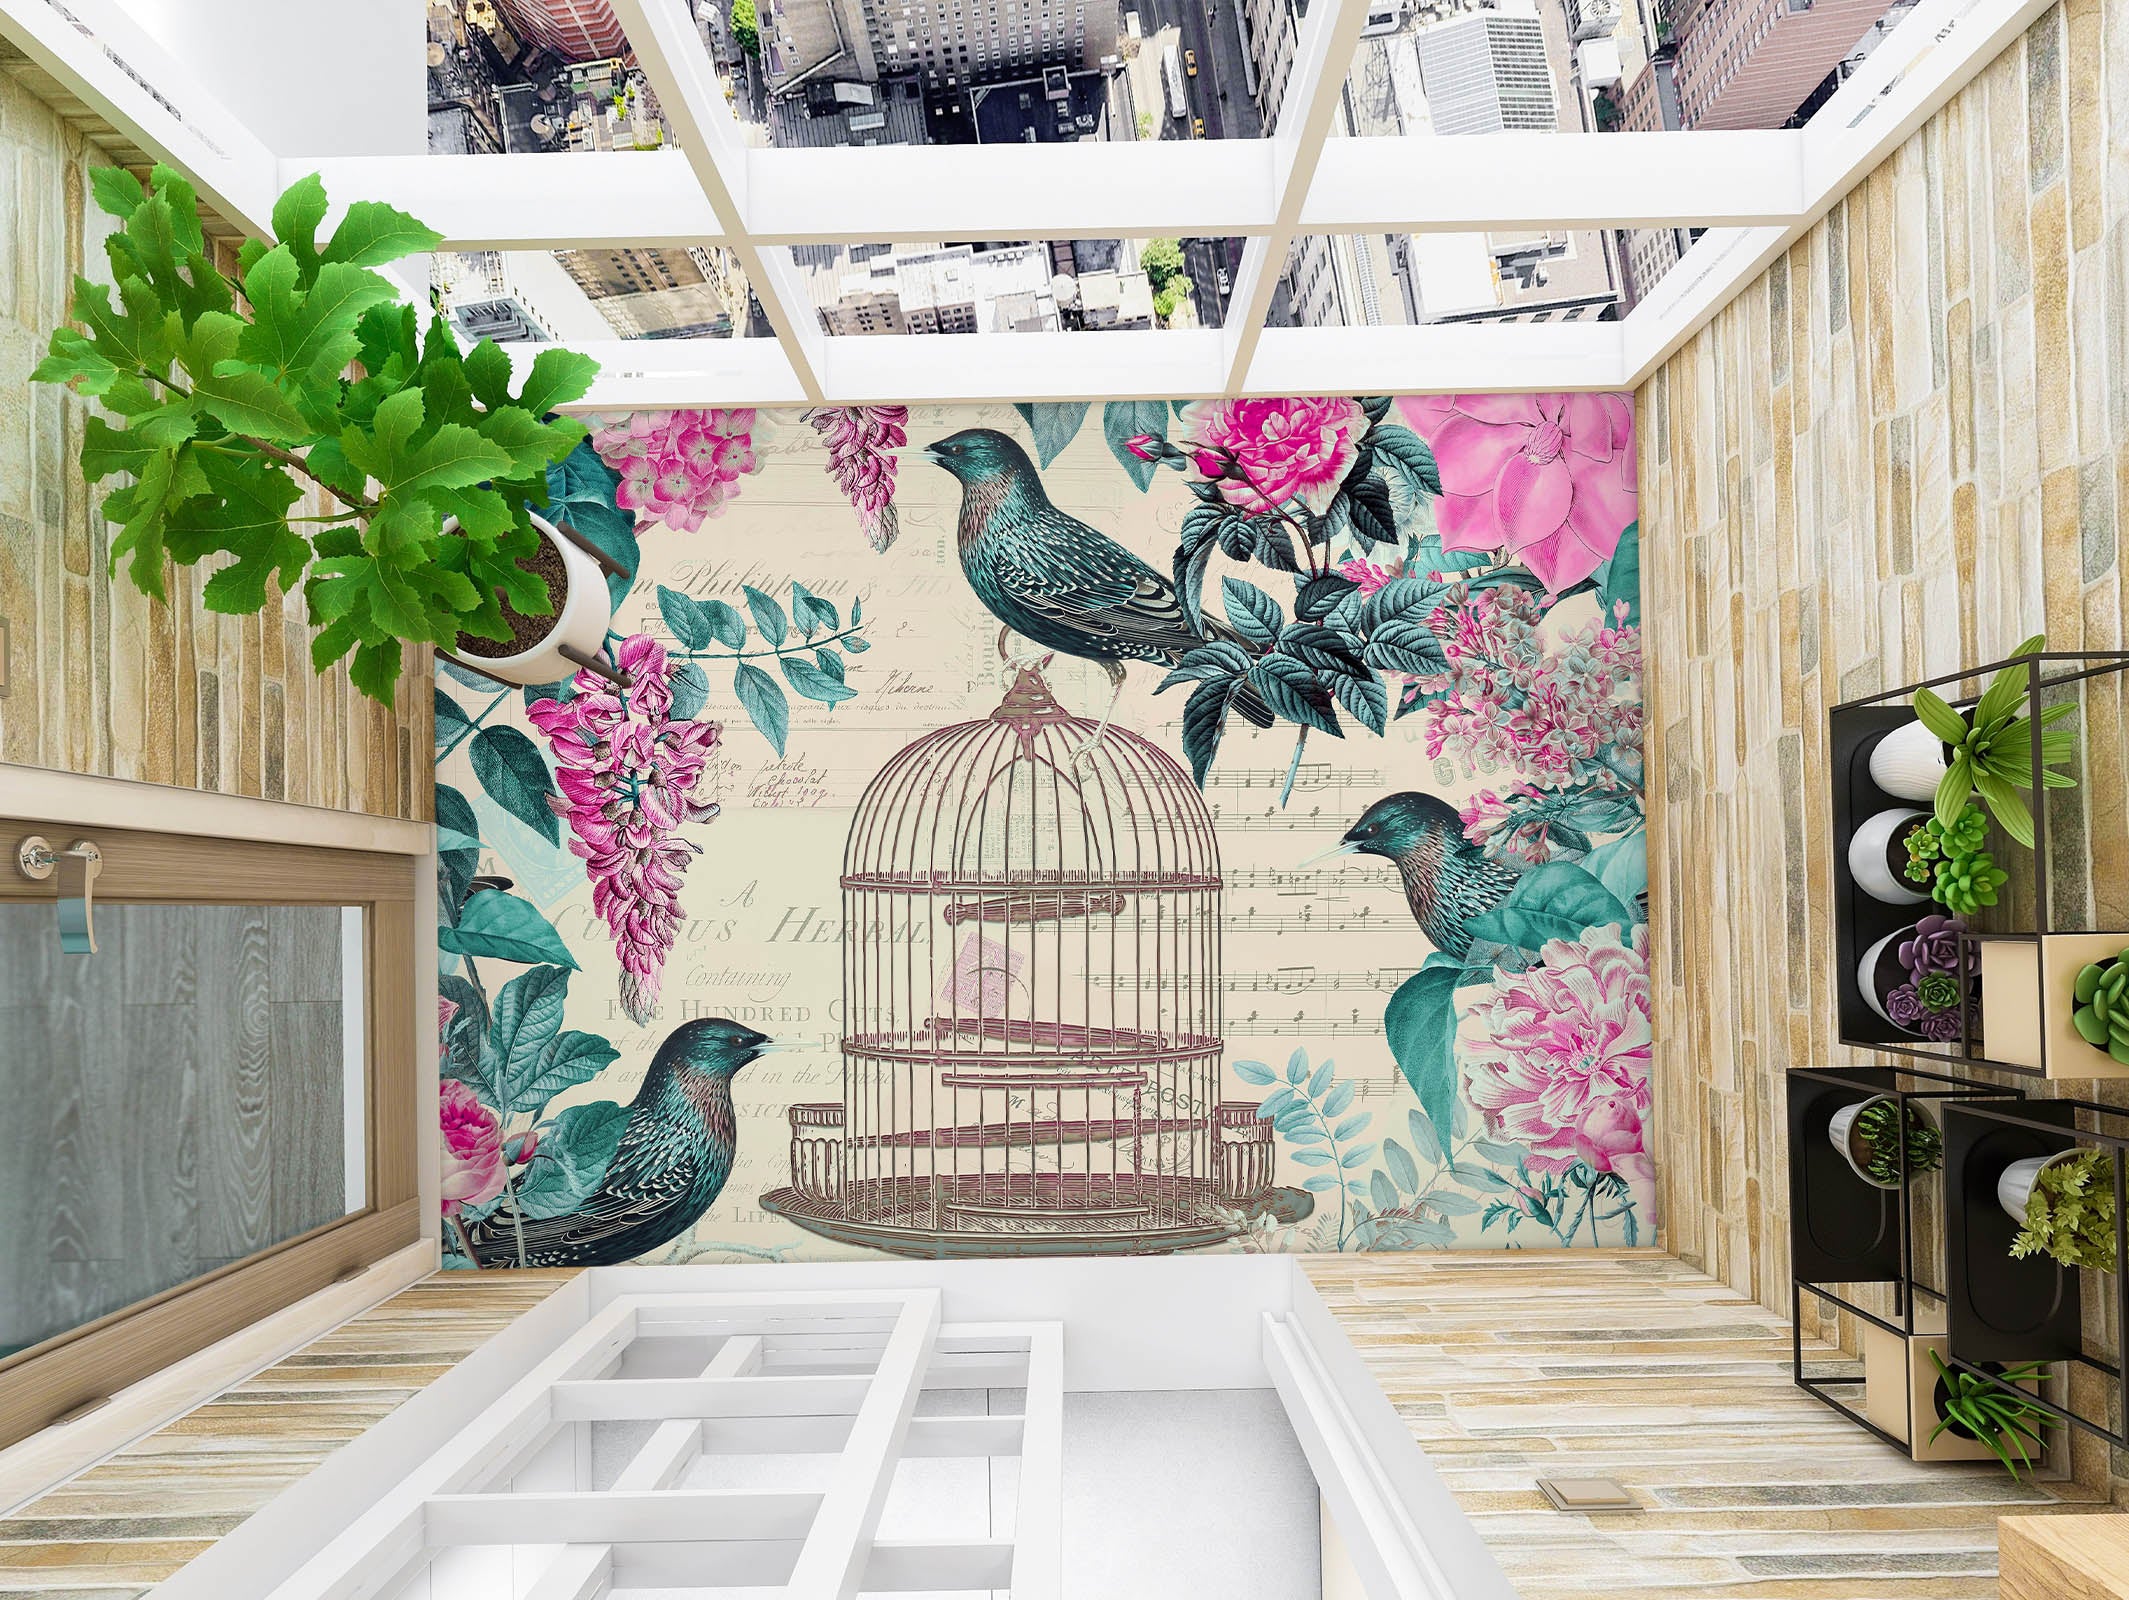 3D Birdcage Bird Flower Bush 140133 Andrea Haase Floor Mural  Wallpaper Murals Self-Adhesive Removable Print Epoxy